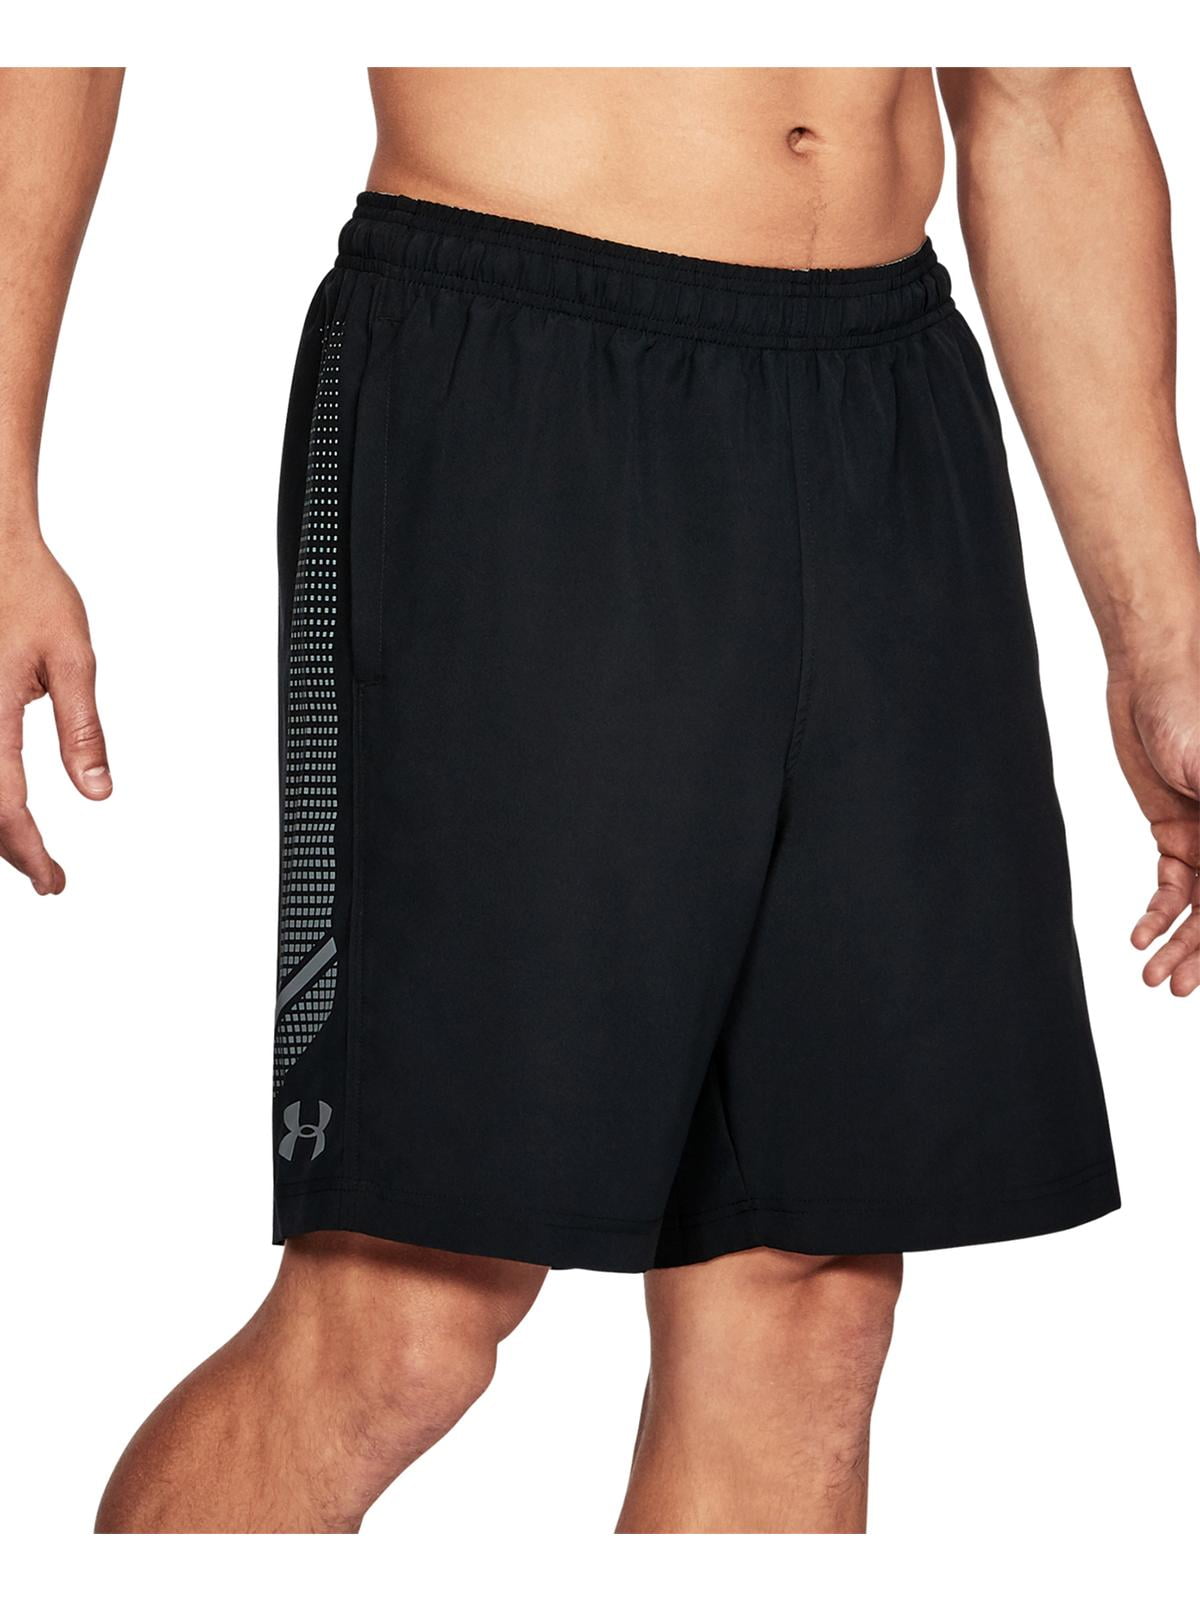 Under Armour - Under Armour Mens Soccer Fitness Shorts - Walmart.com ...